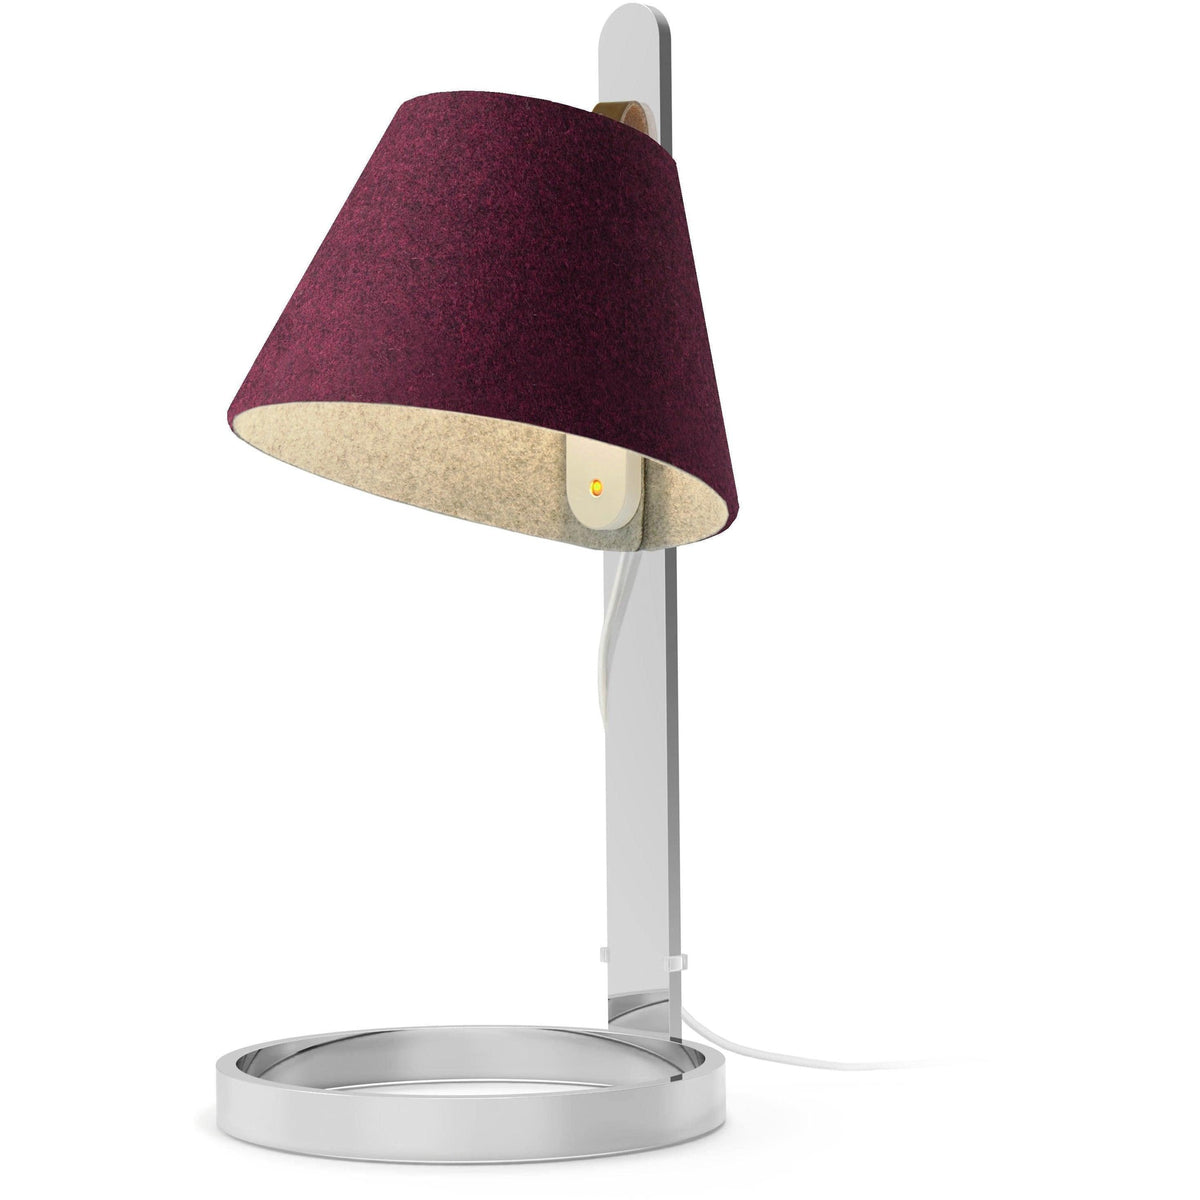 Pablo Designs - Lana Table Lamp - LANA MINI TBL PLUM/GRY CRM | Montreal Lighting & Hardware